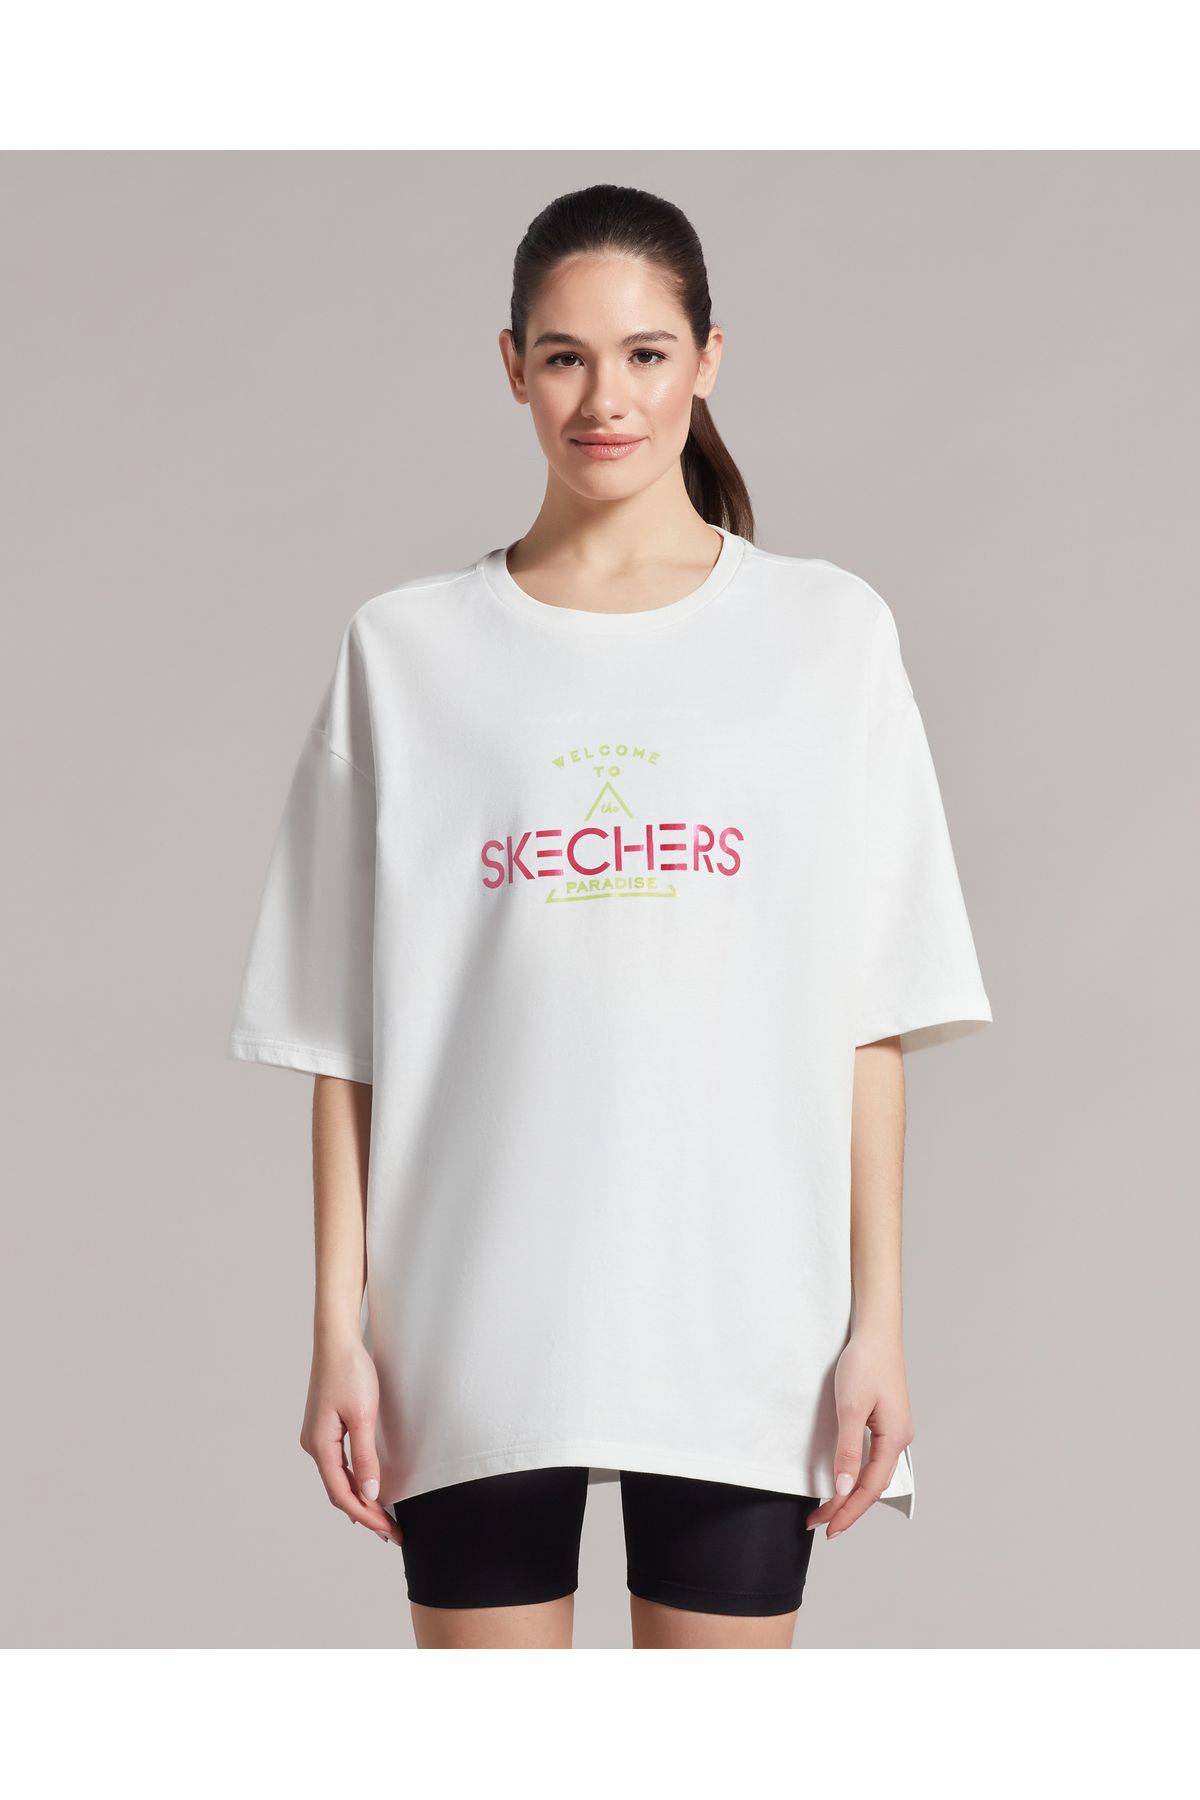 Skechers W Graphic Tee Neon Print Crew Neck T-shirt Kadın Beyaz Tshirt S231296-100